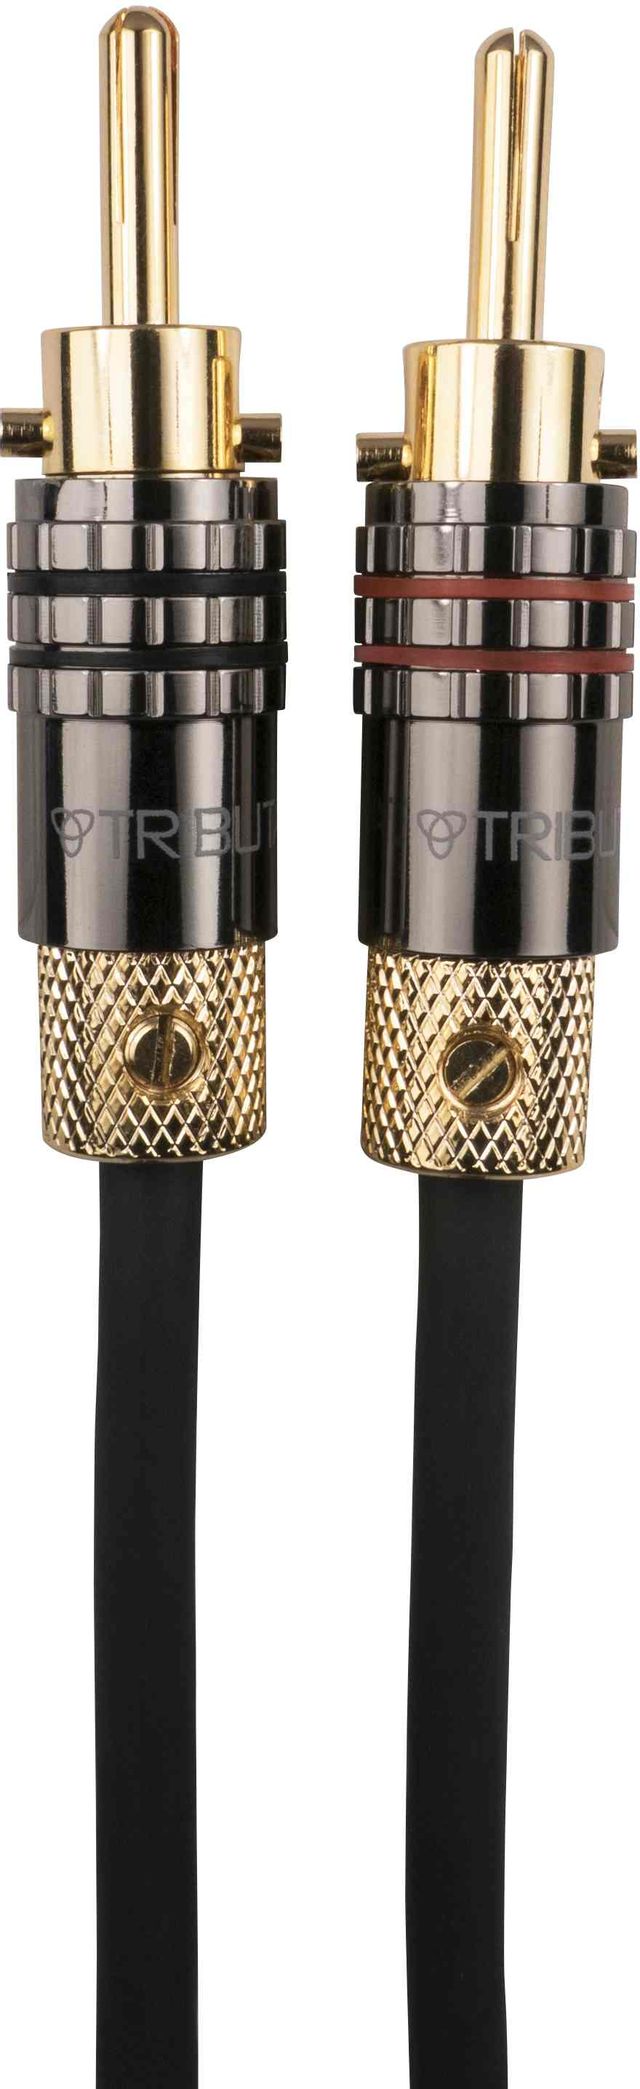 Tributaries® Series 8 8 Ft. Banana Plugs Speaker Cable 0